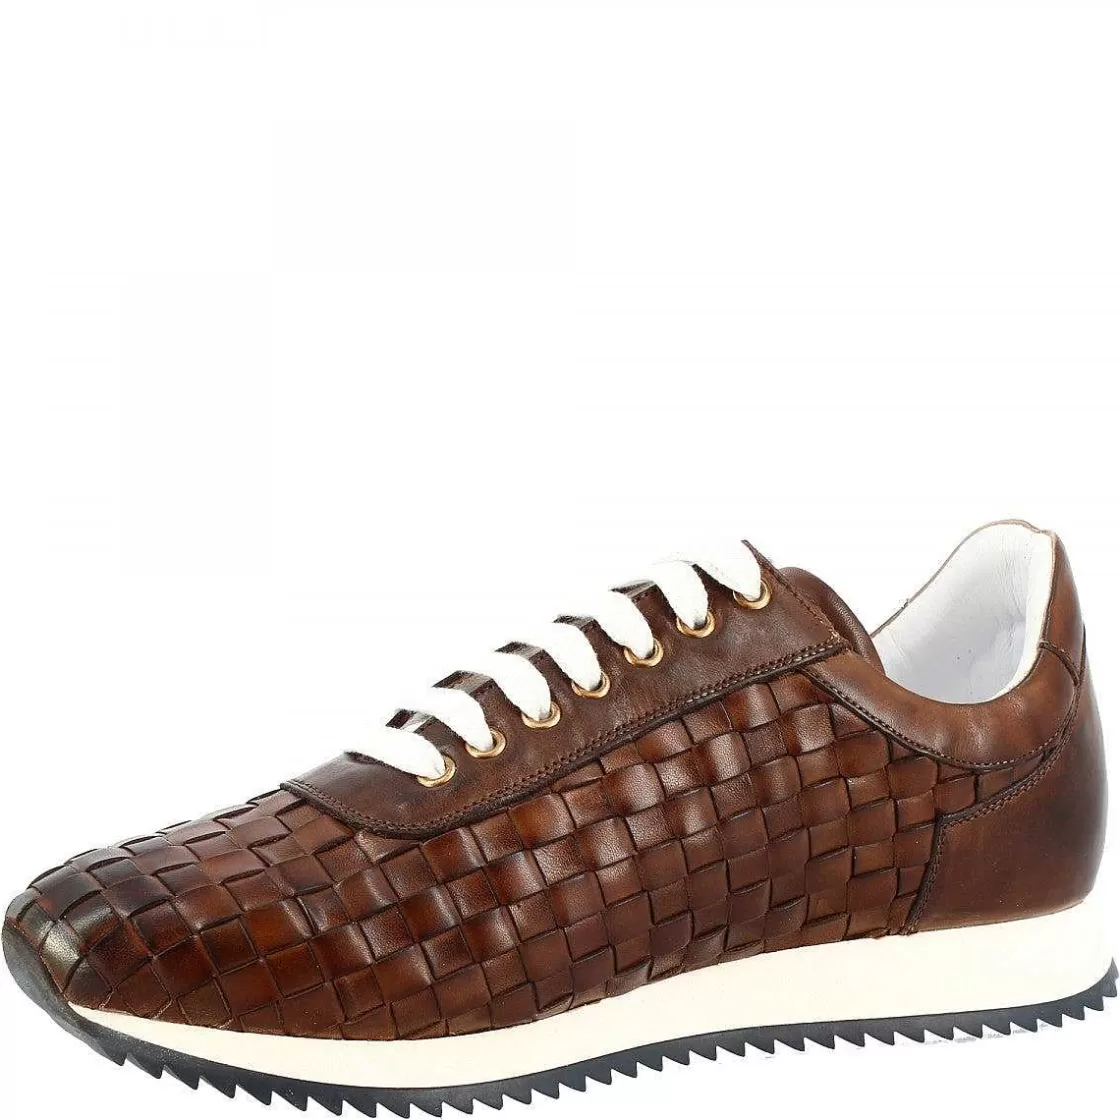 Leonardo Men'S Casual Sneakers Handmade In Brandy Woven Leather Discount